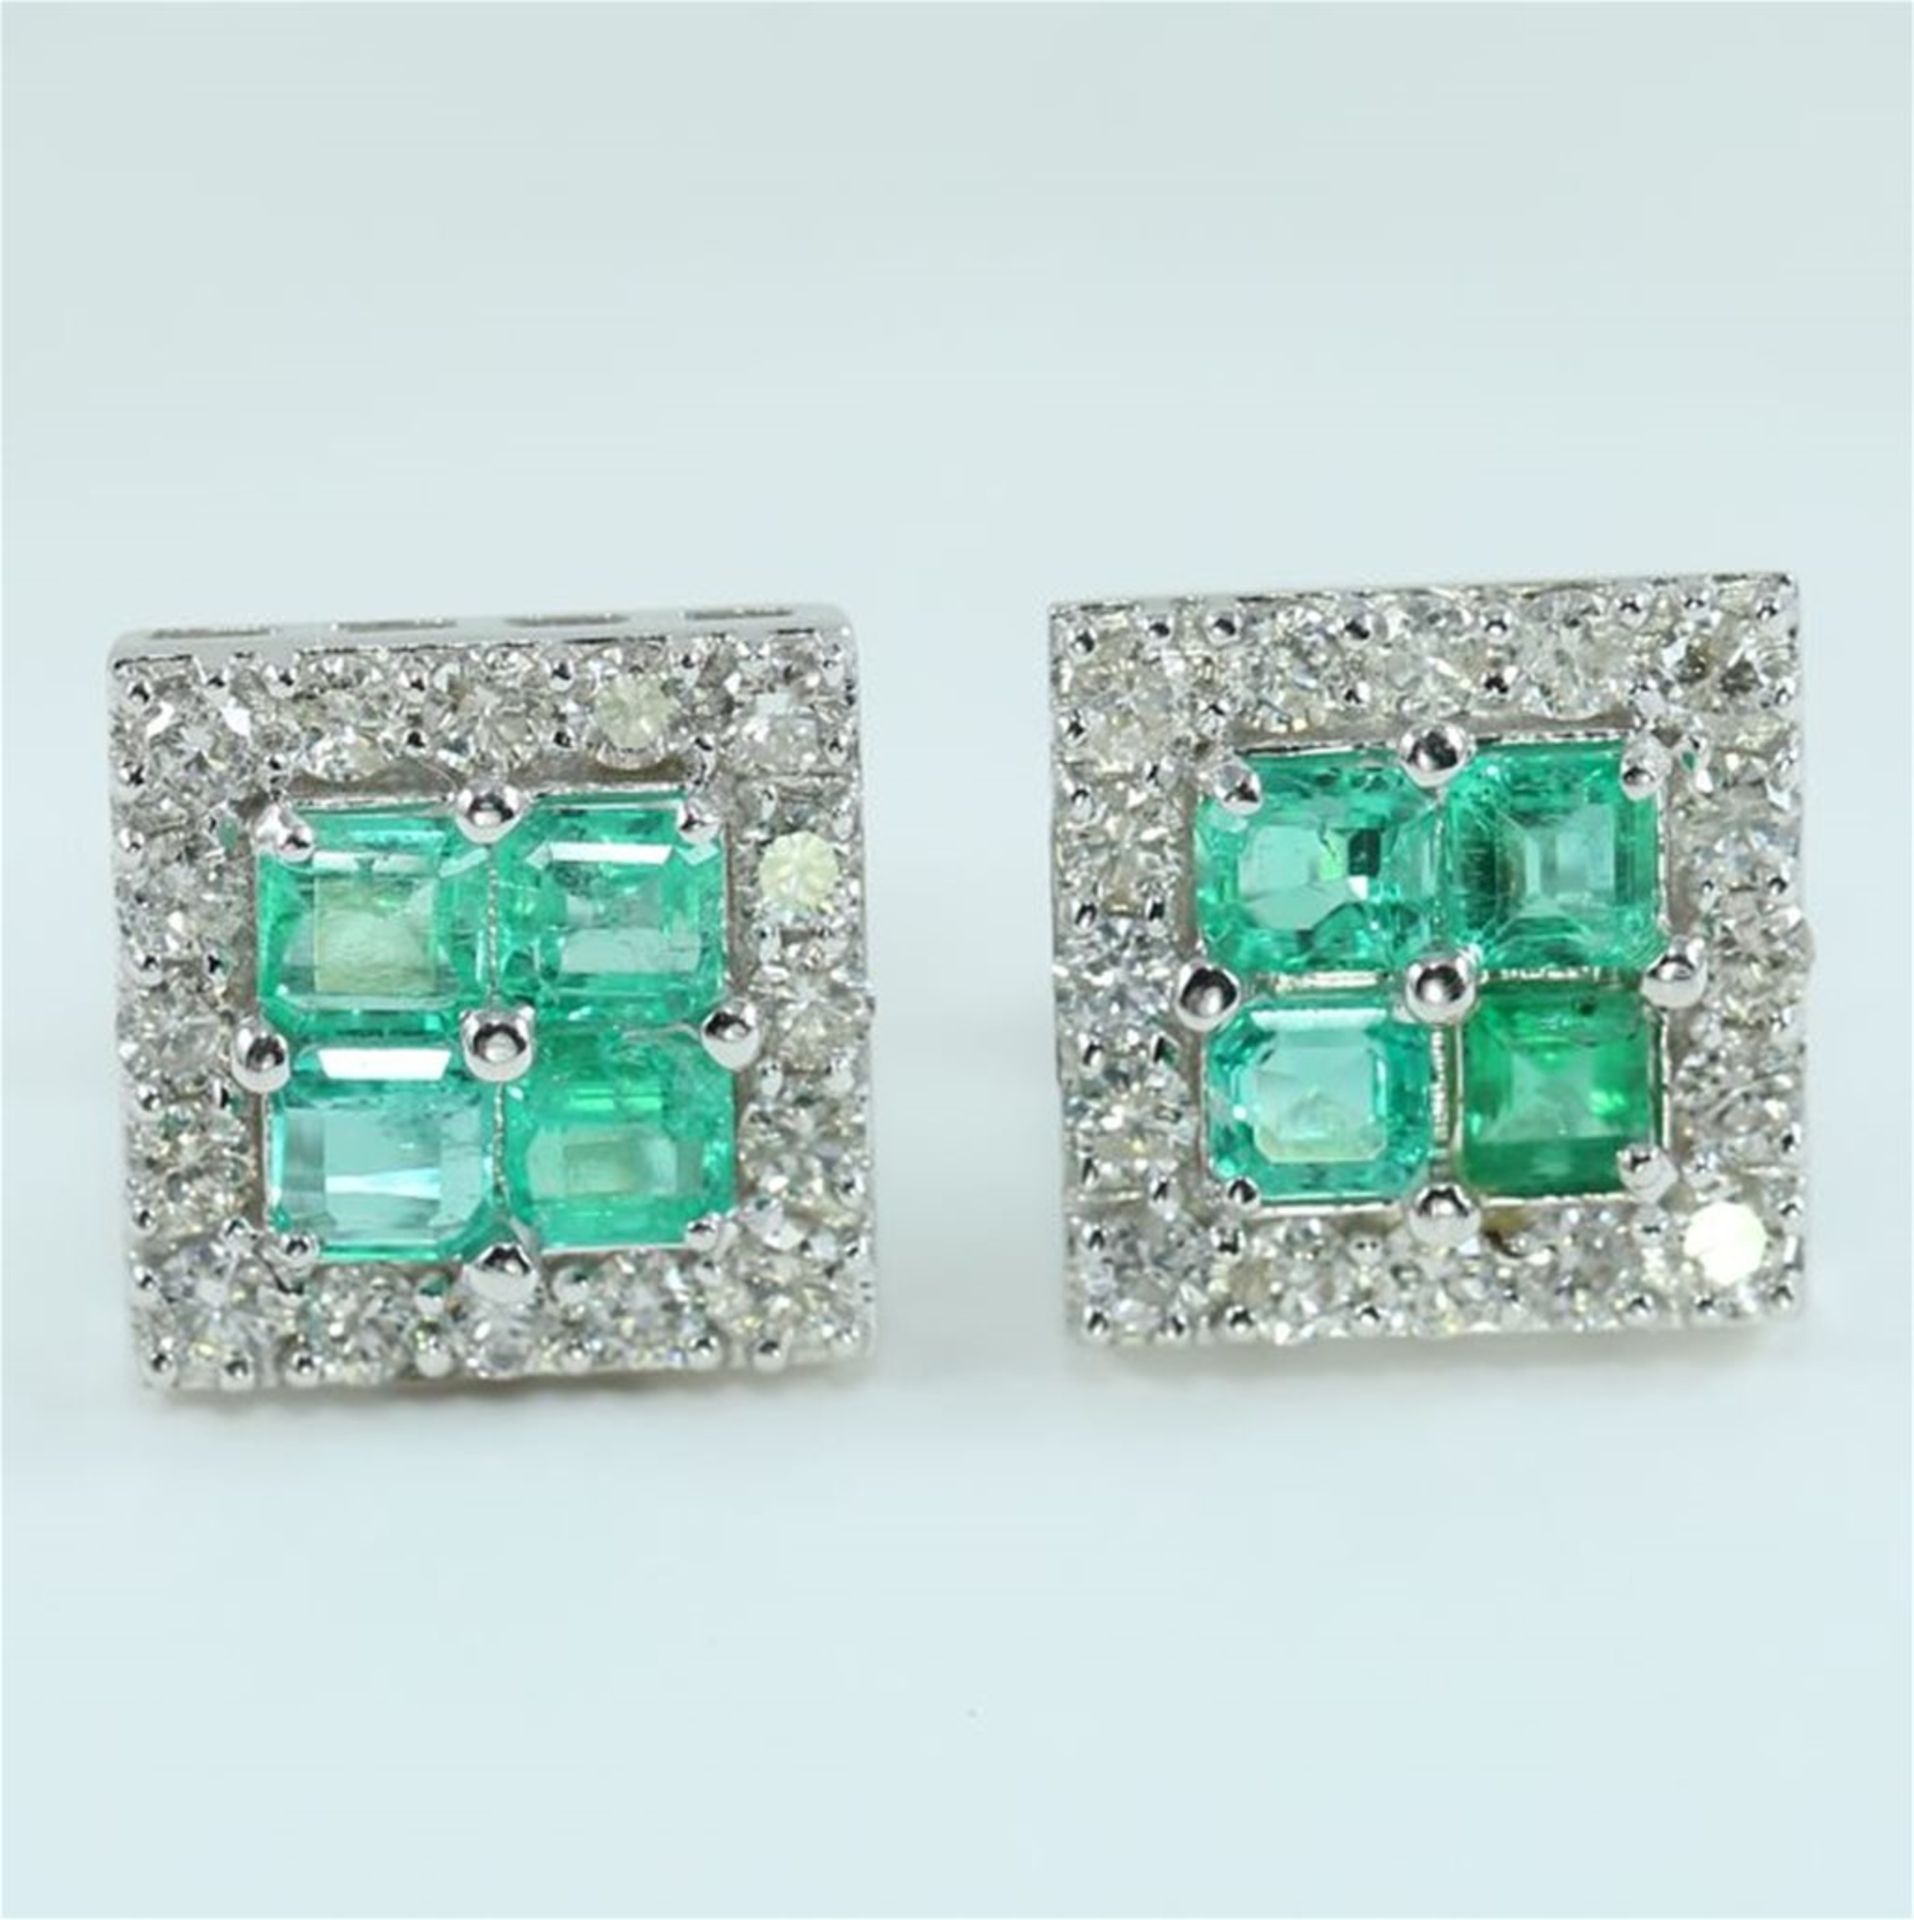 IGI Certified 14 K / 545 White Gold Diamond and Emerald Earrings - Image 4 of 4